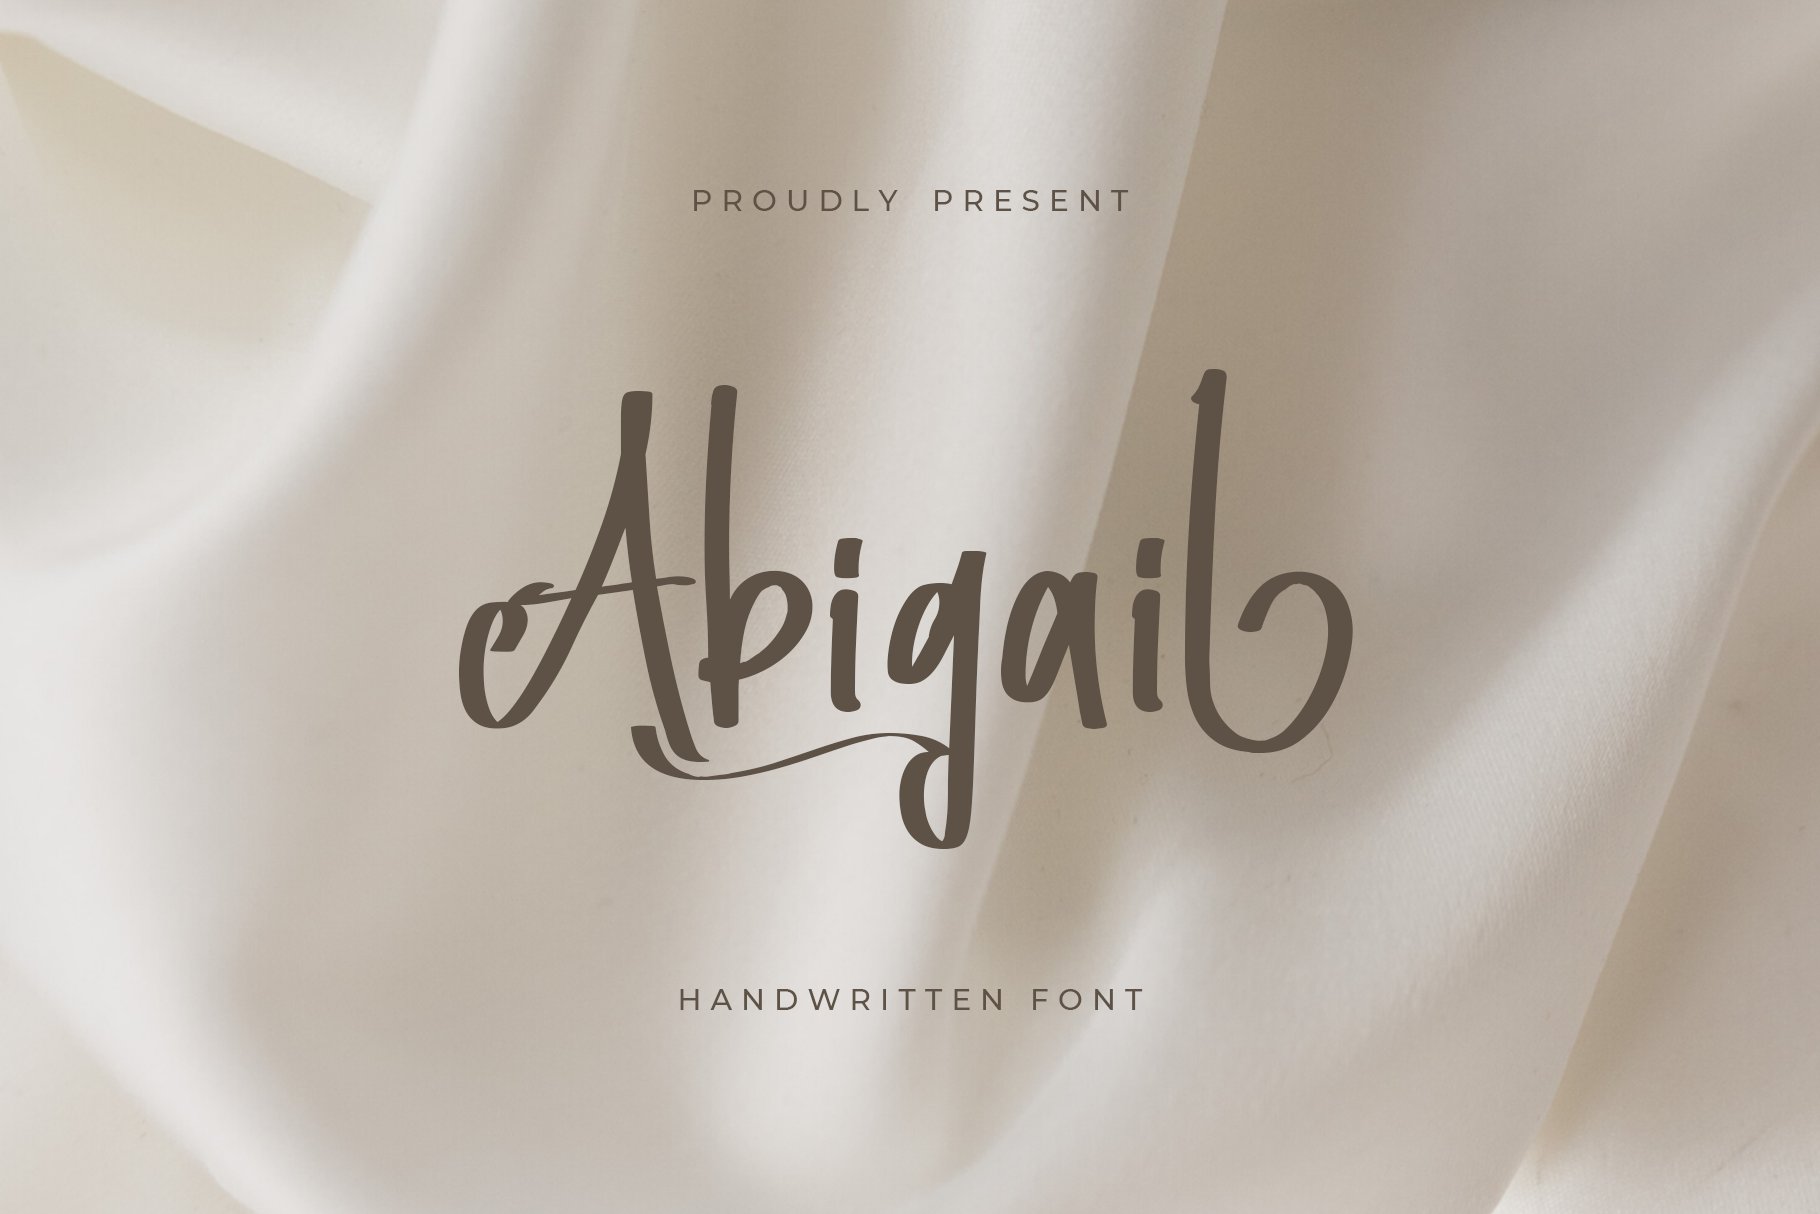 Abigail Handwritten font cover image.